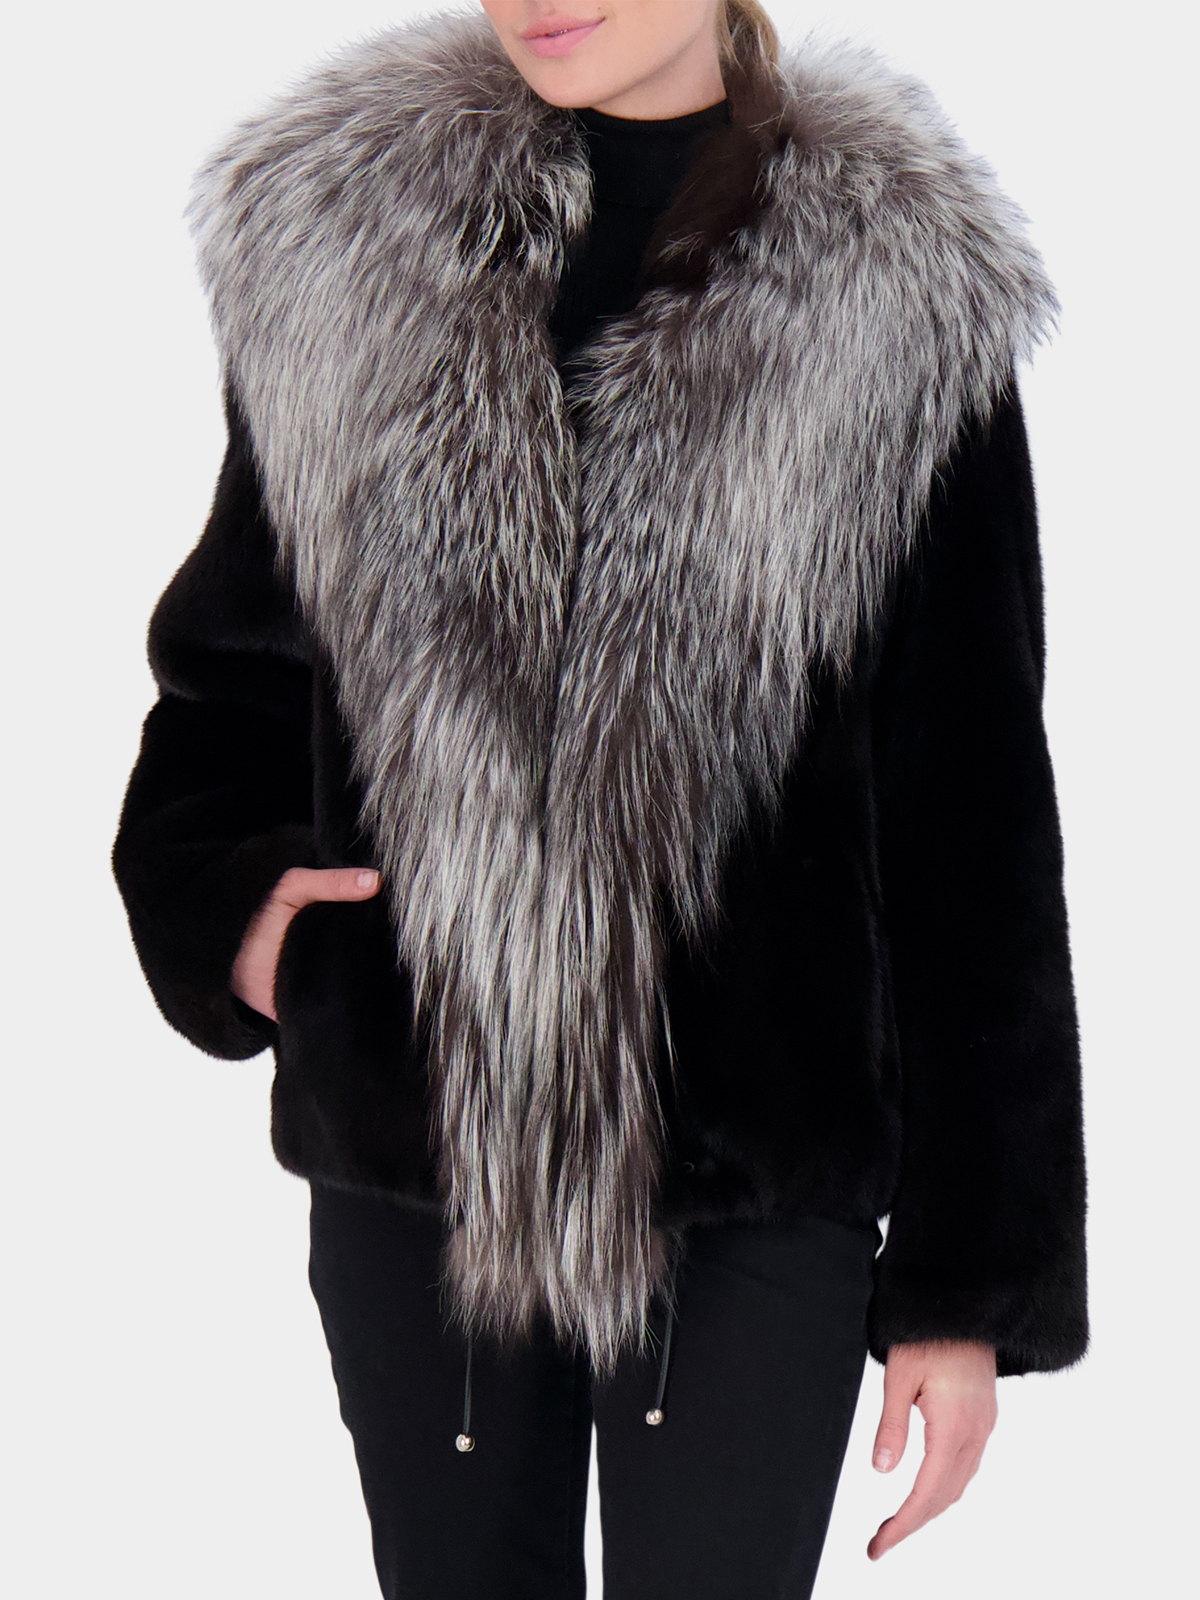 2021 New Winter Real Mink Fur With Fox Fur Collar Cuff Coat Women Full Pelt  Outerwear Thick Warm Fashion Elegant Black Overdress